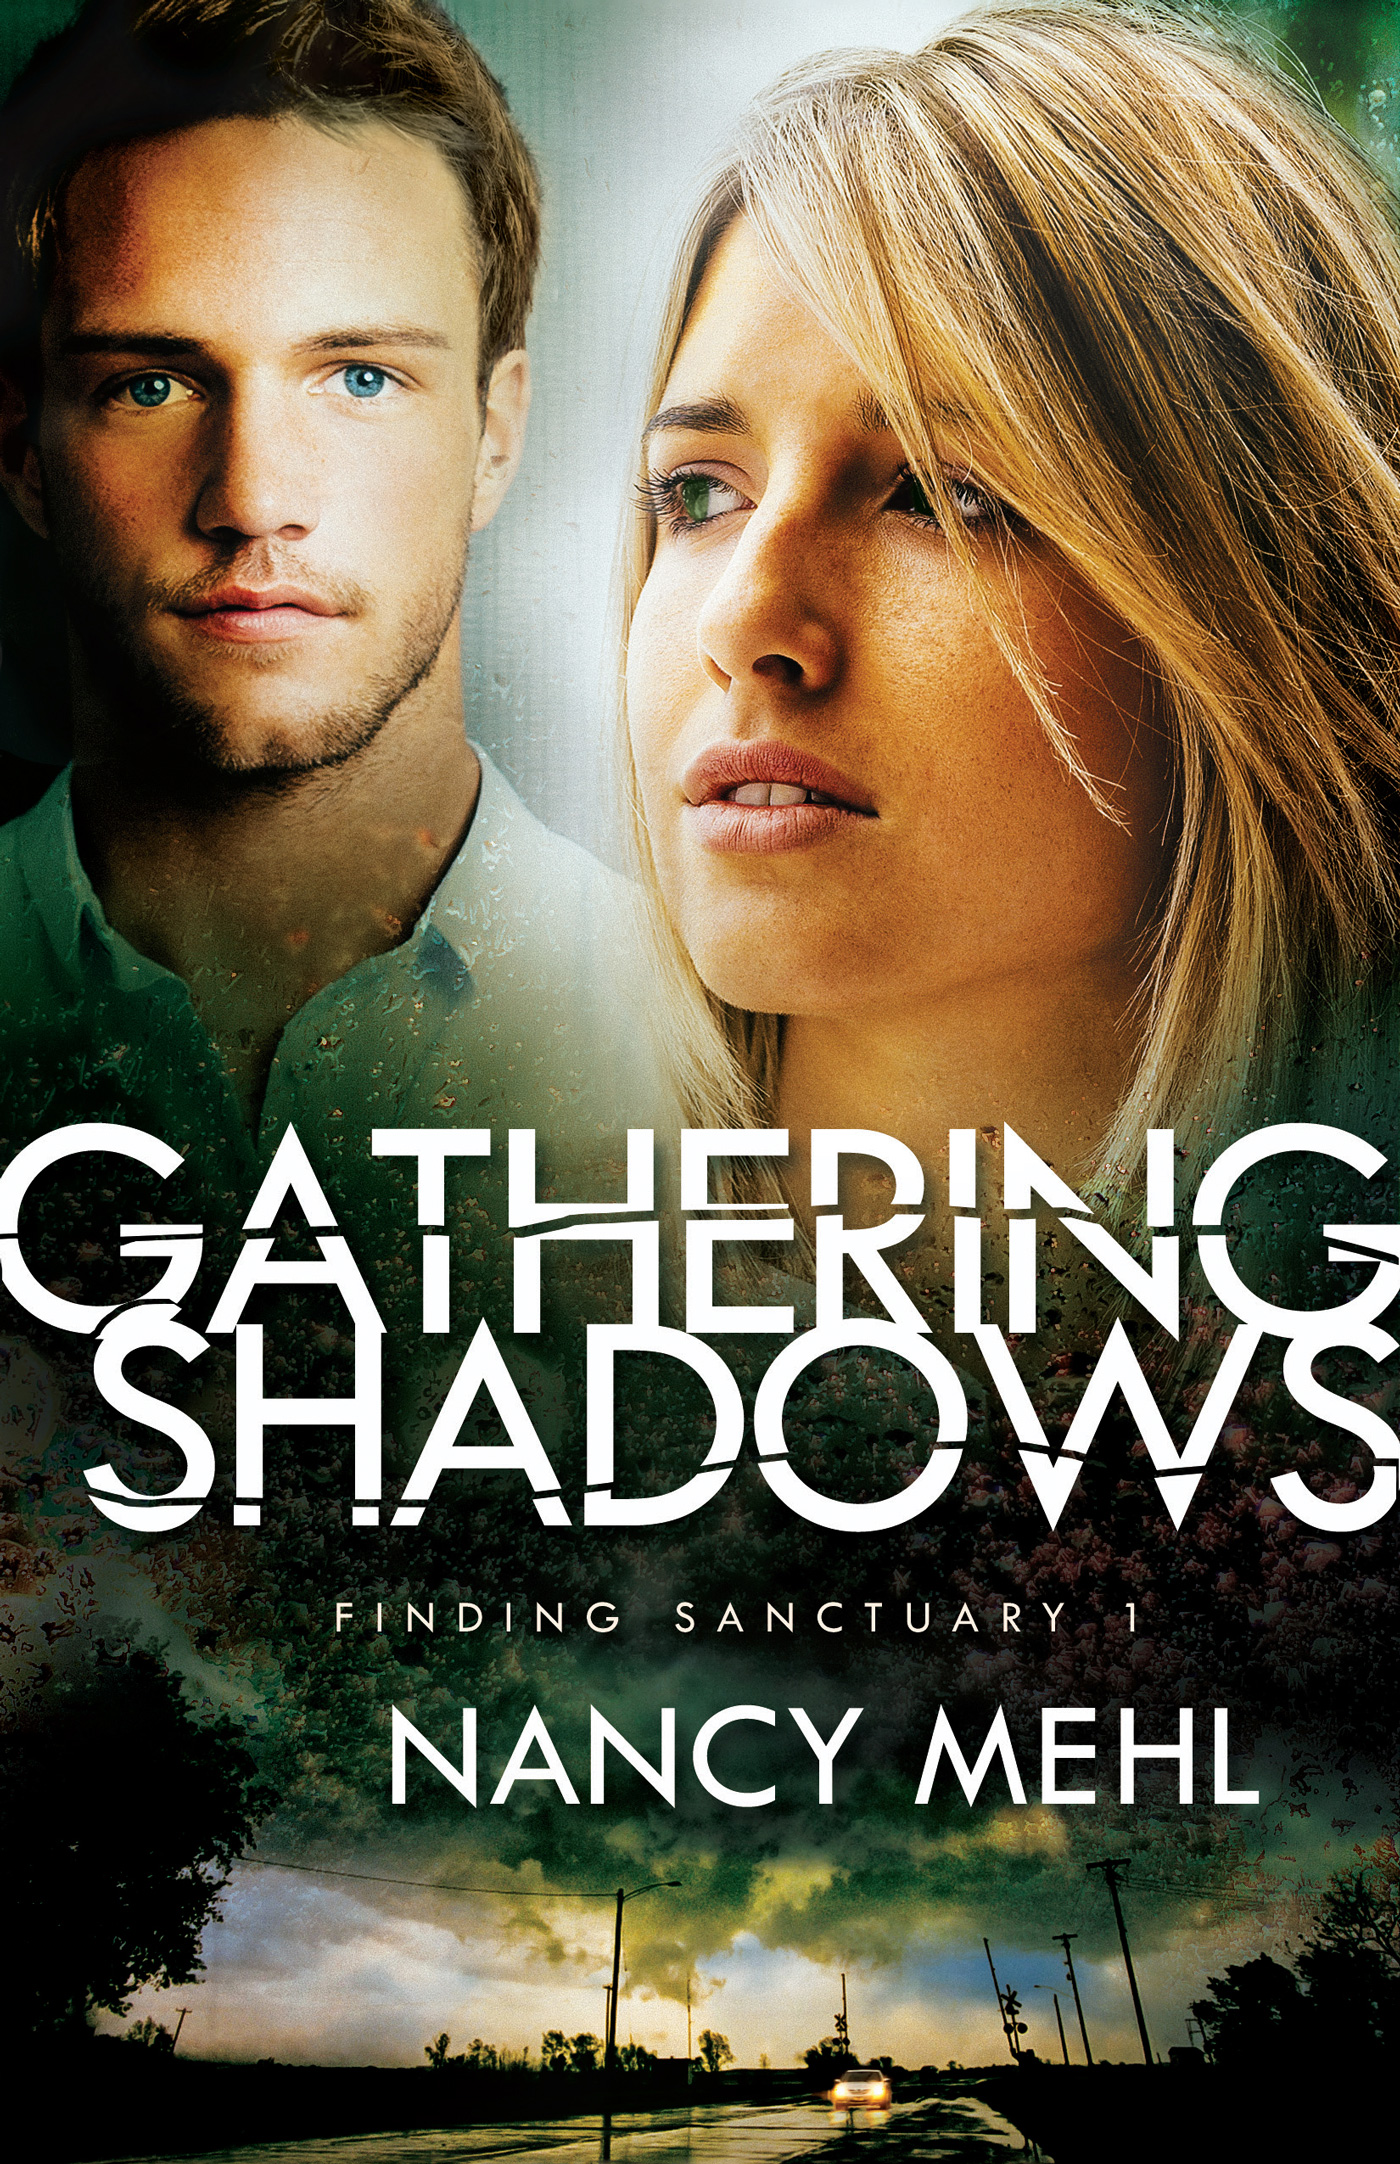 Gathering Shadows (2014) by Nancy Mehl